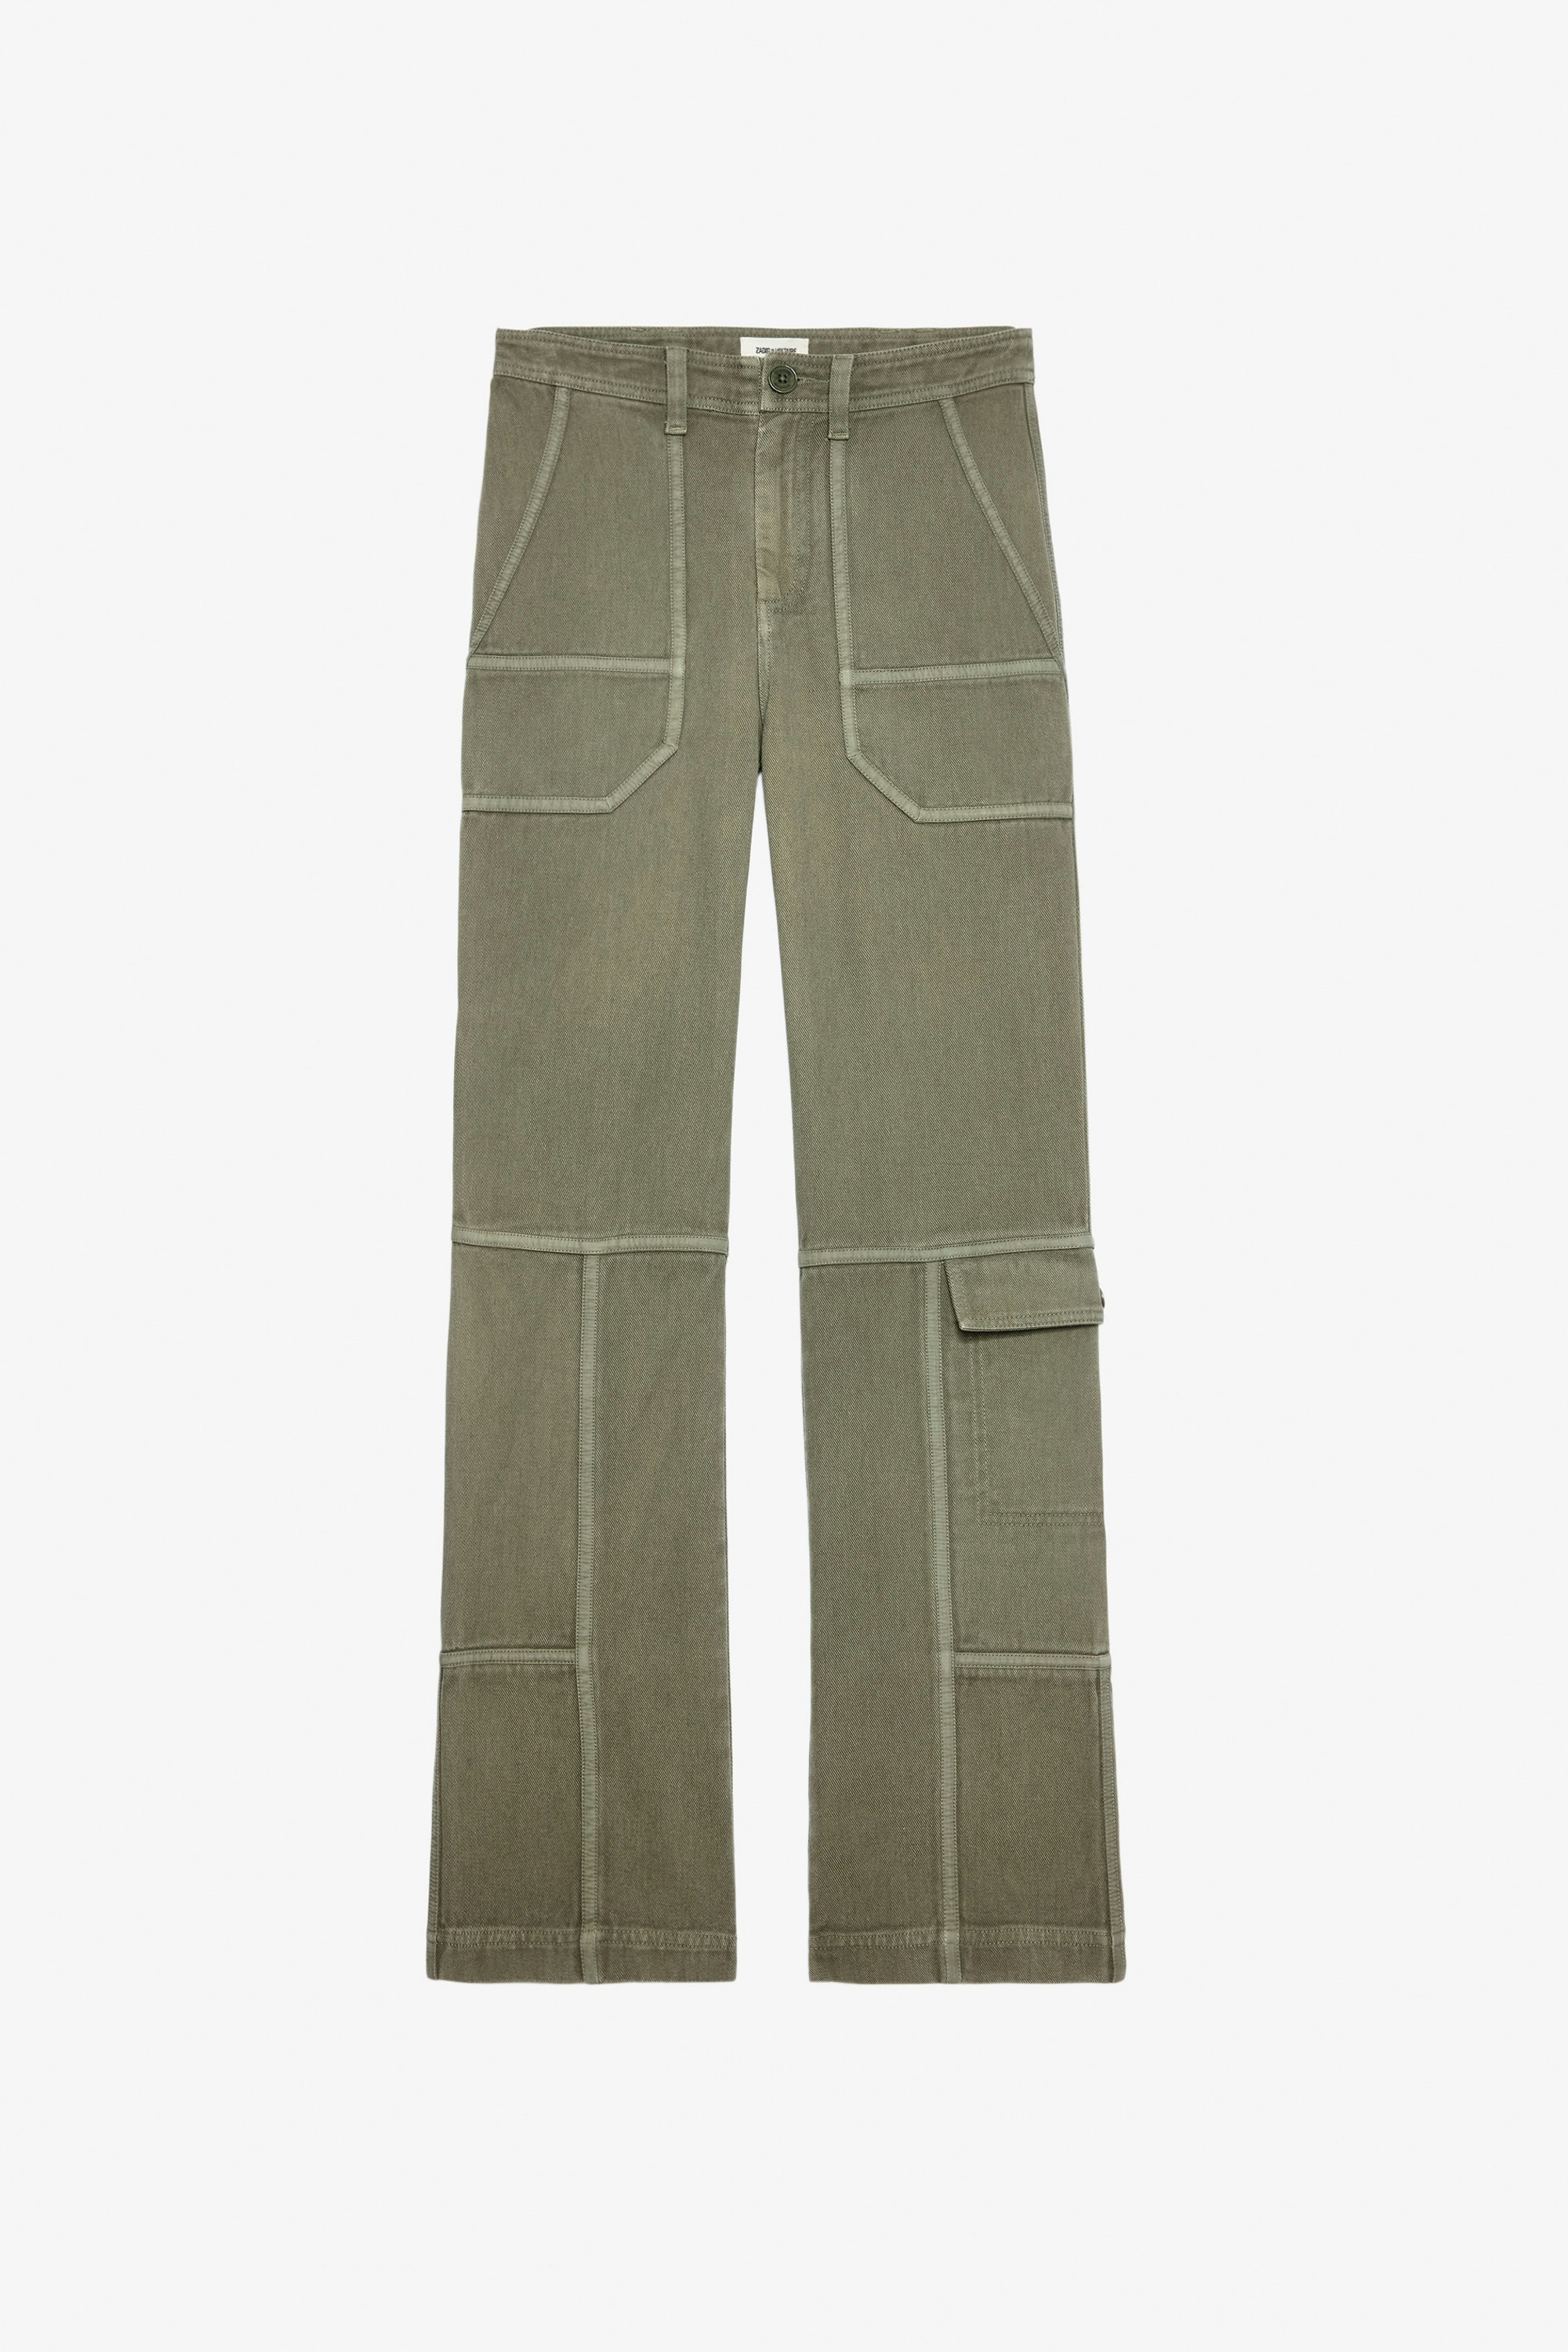 Pepper Pants - Women’s khaki twill cotton pants with contrasting details.